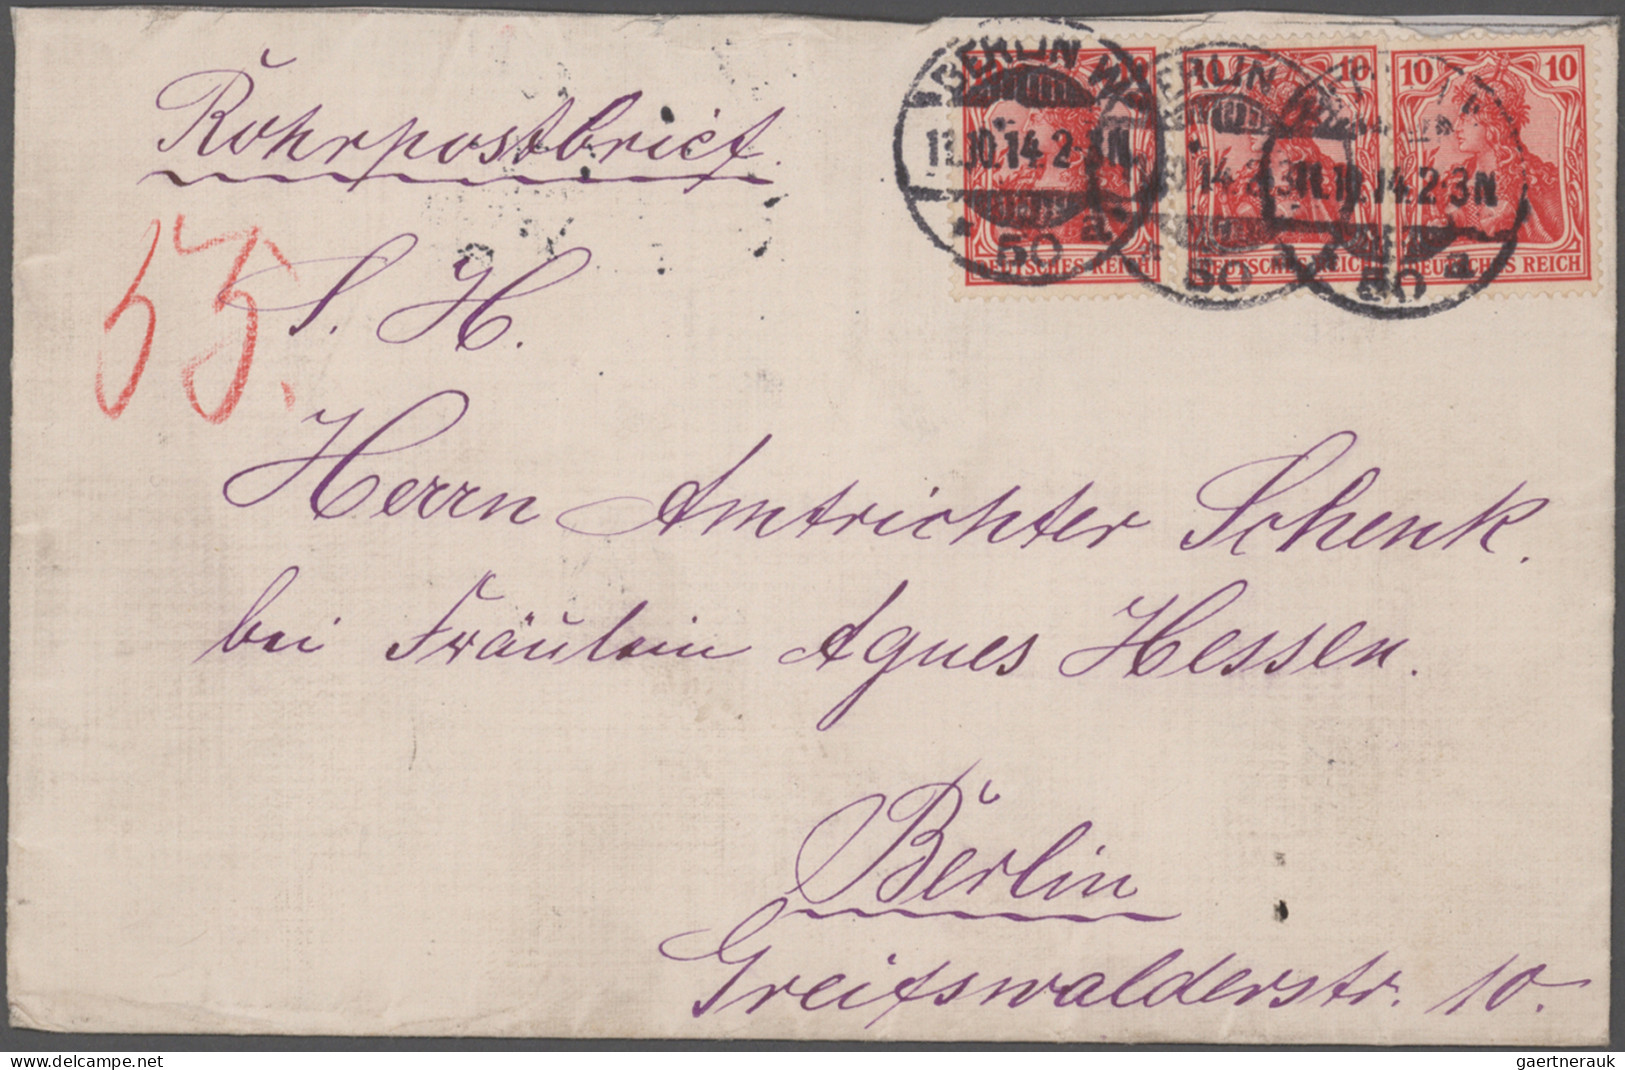 Berlin - Rohrpost: 1879/1960, saubere Spezial-Sammlung mit ca. 130 Rohrpost-Bele